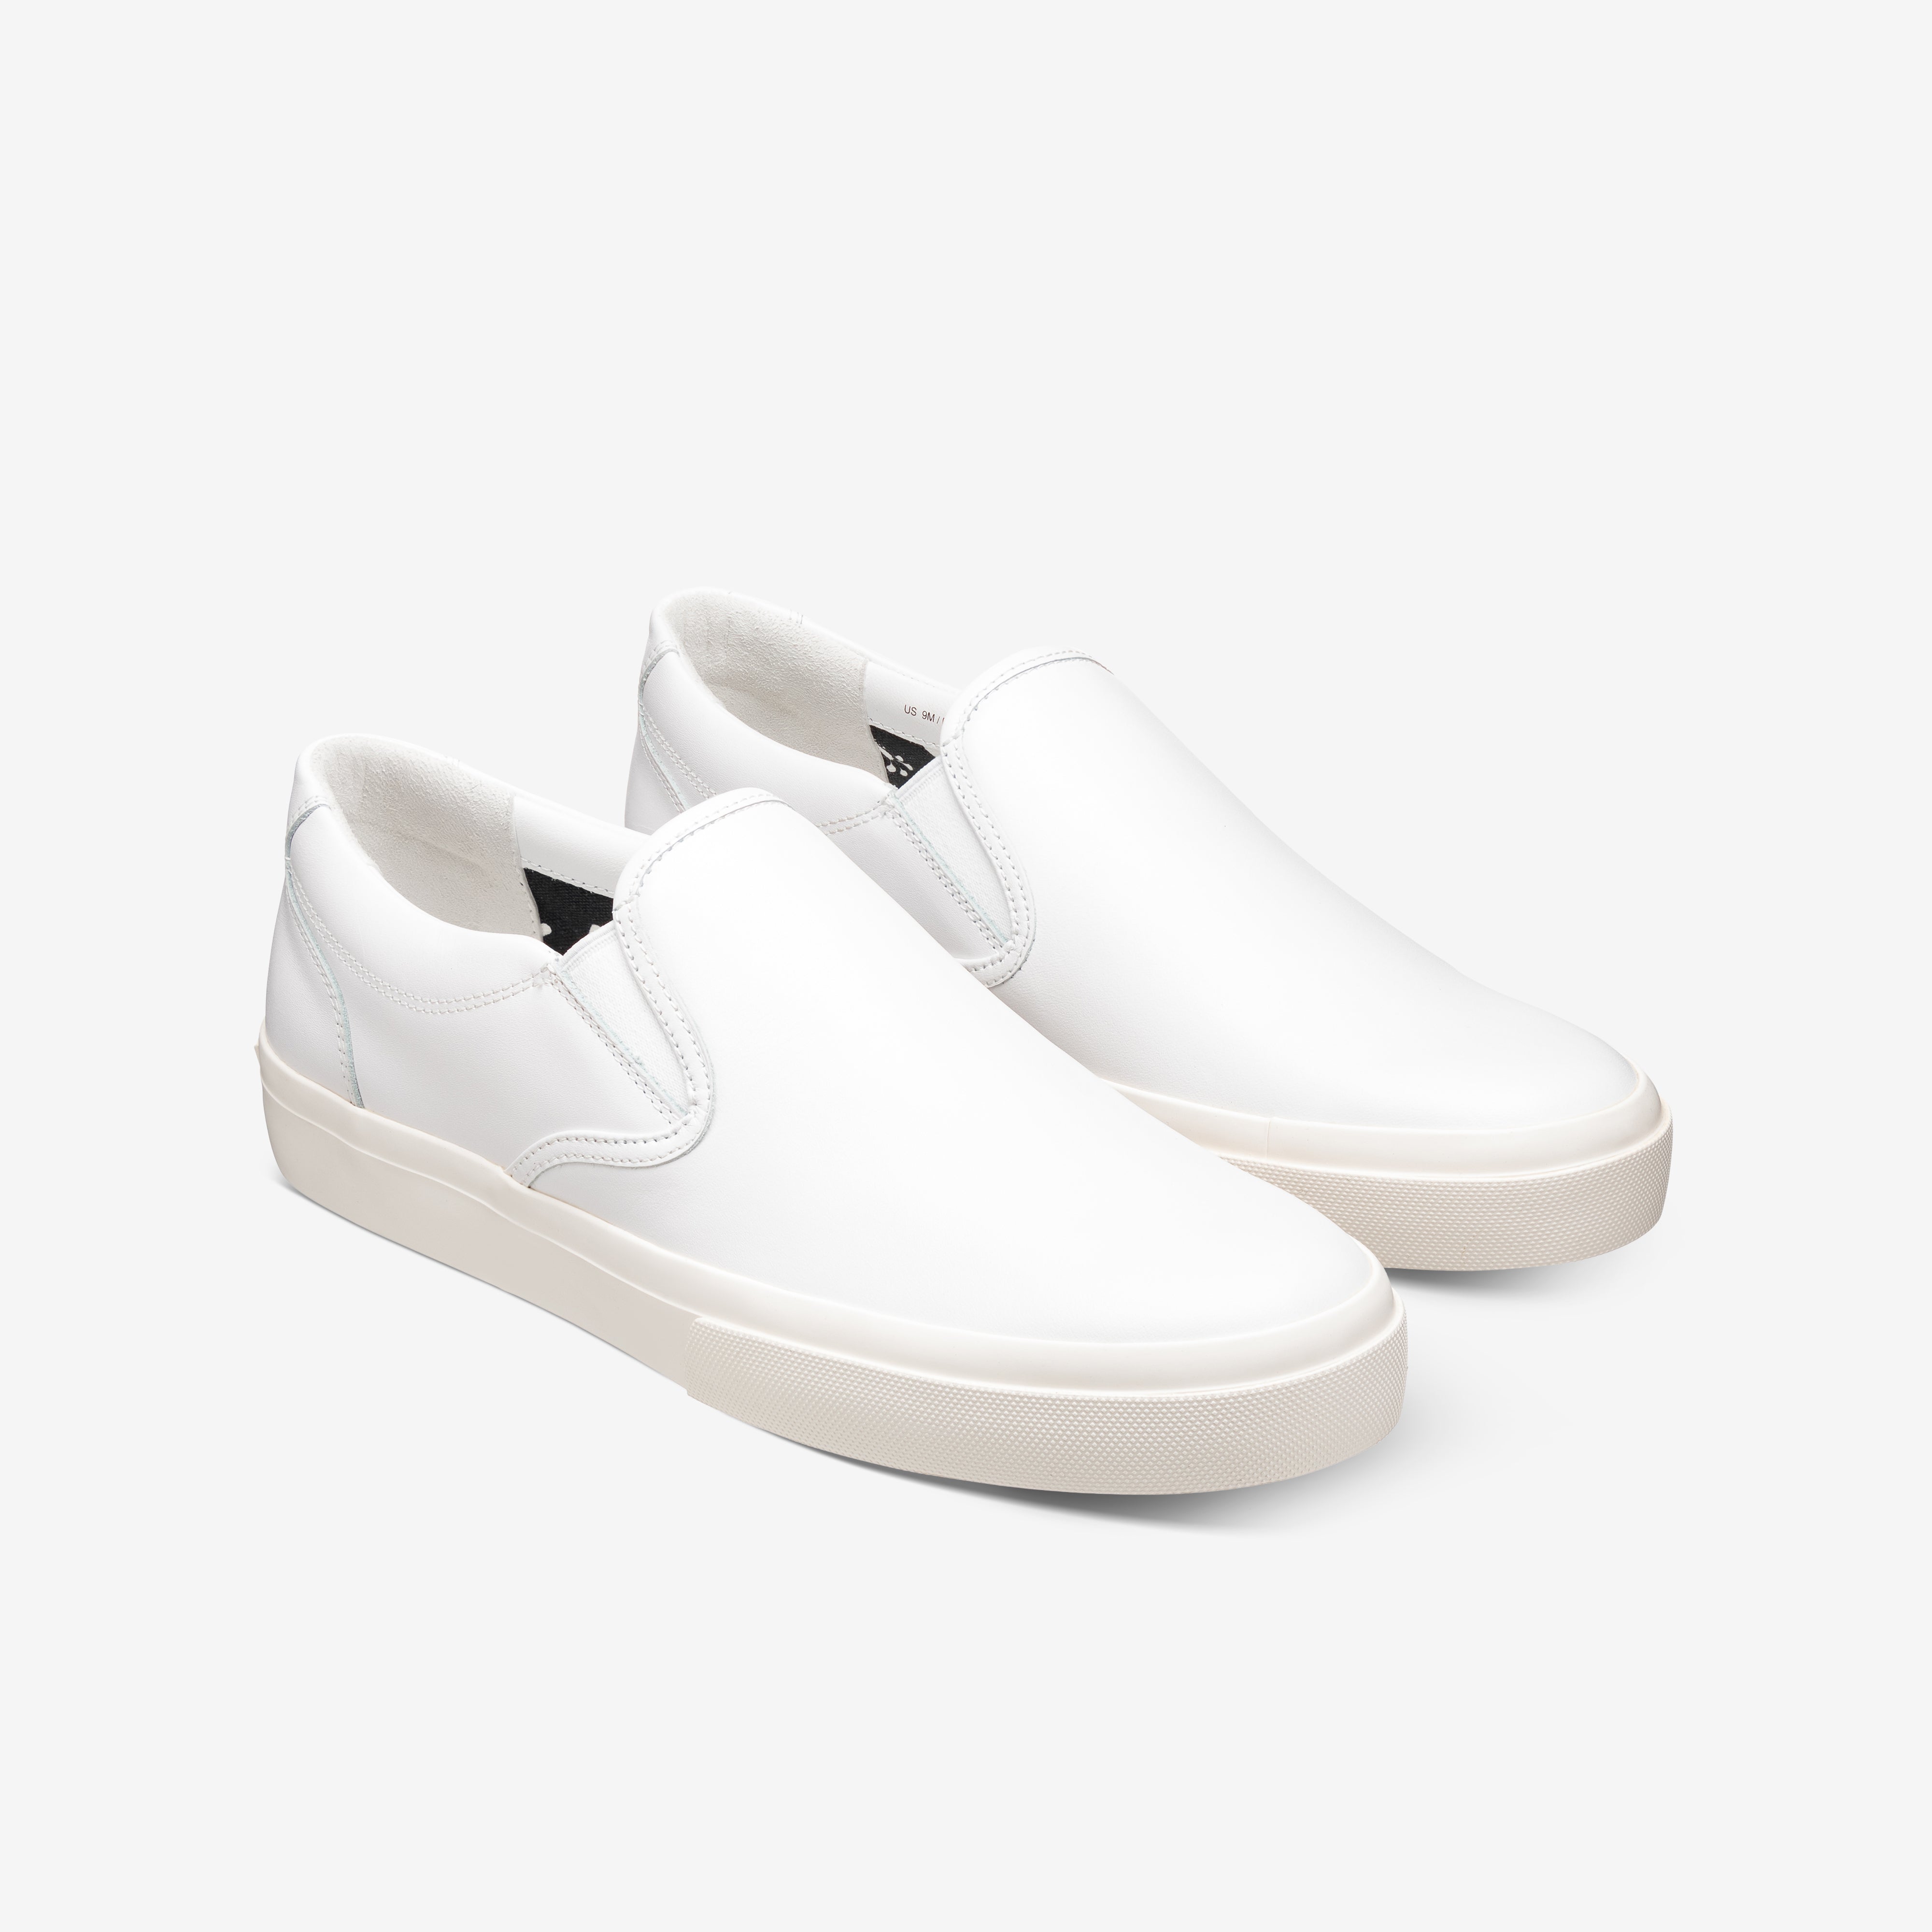 Greats - The Slip - Blanco White Leather - Men's Shoe –